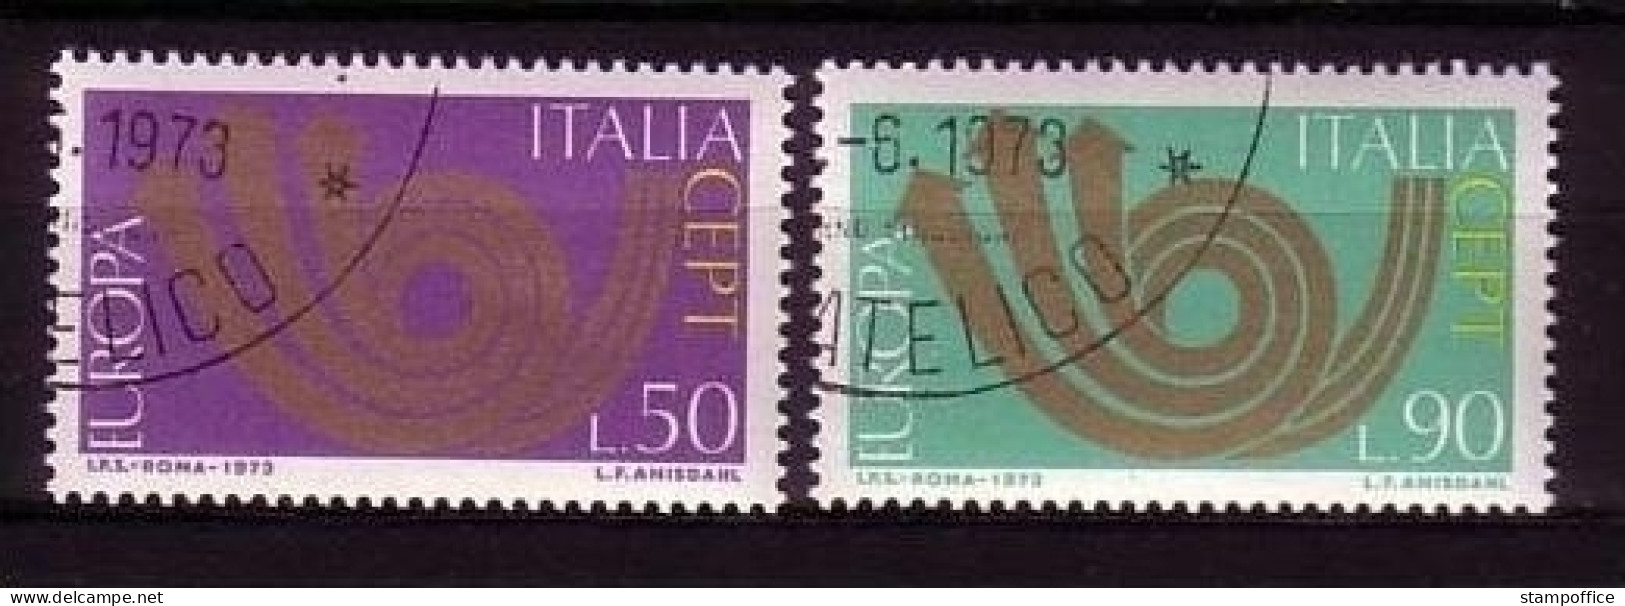 ITALIEN MI-NR. 1409-1410 O EUROPA 1973 - POSTHORN - 1973